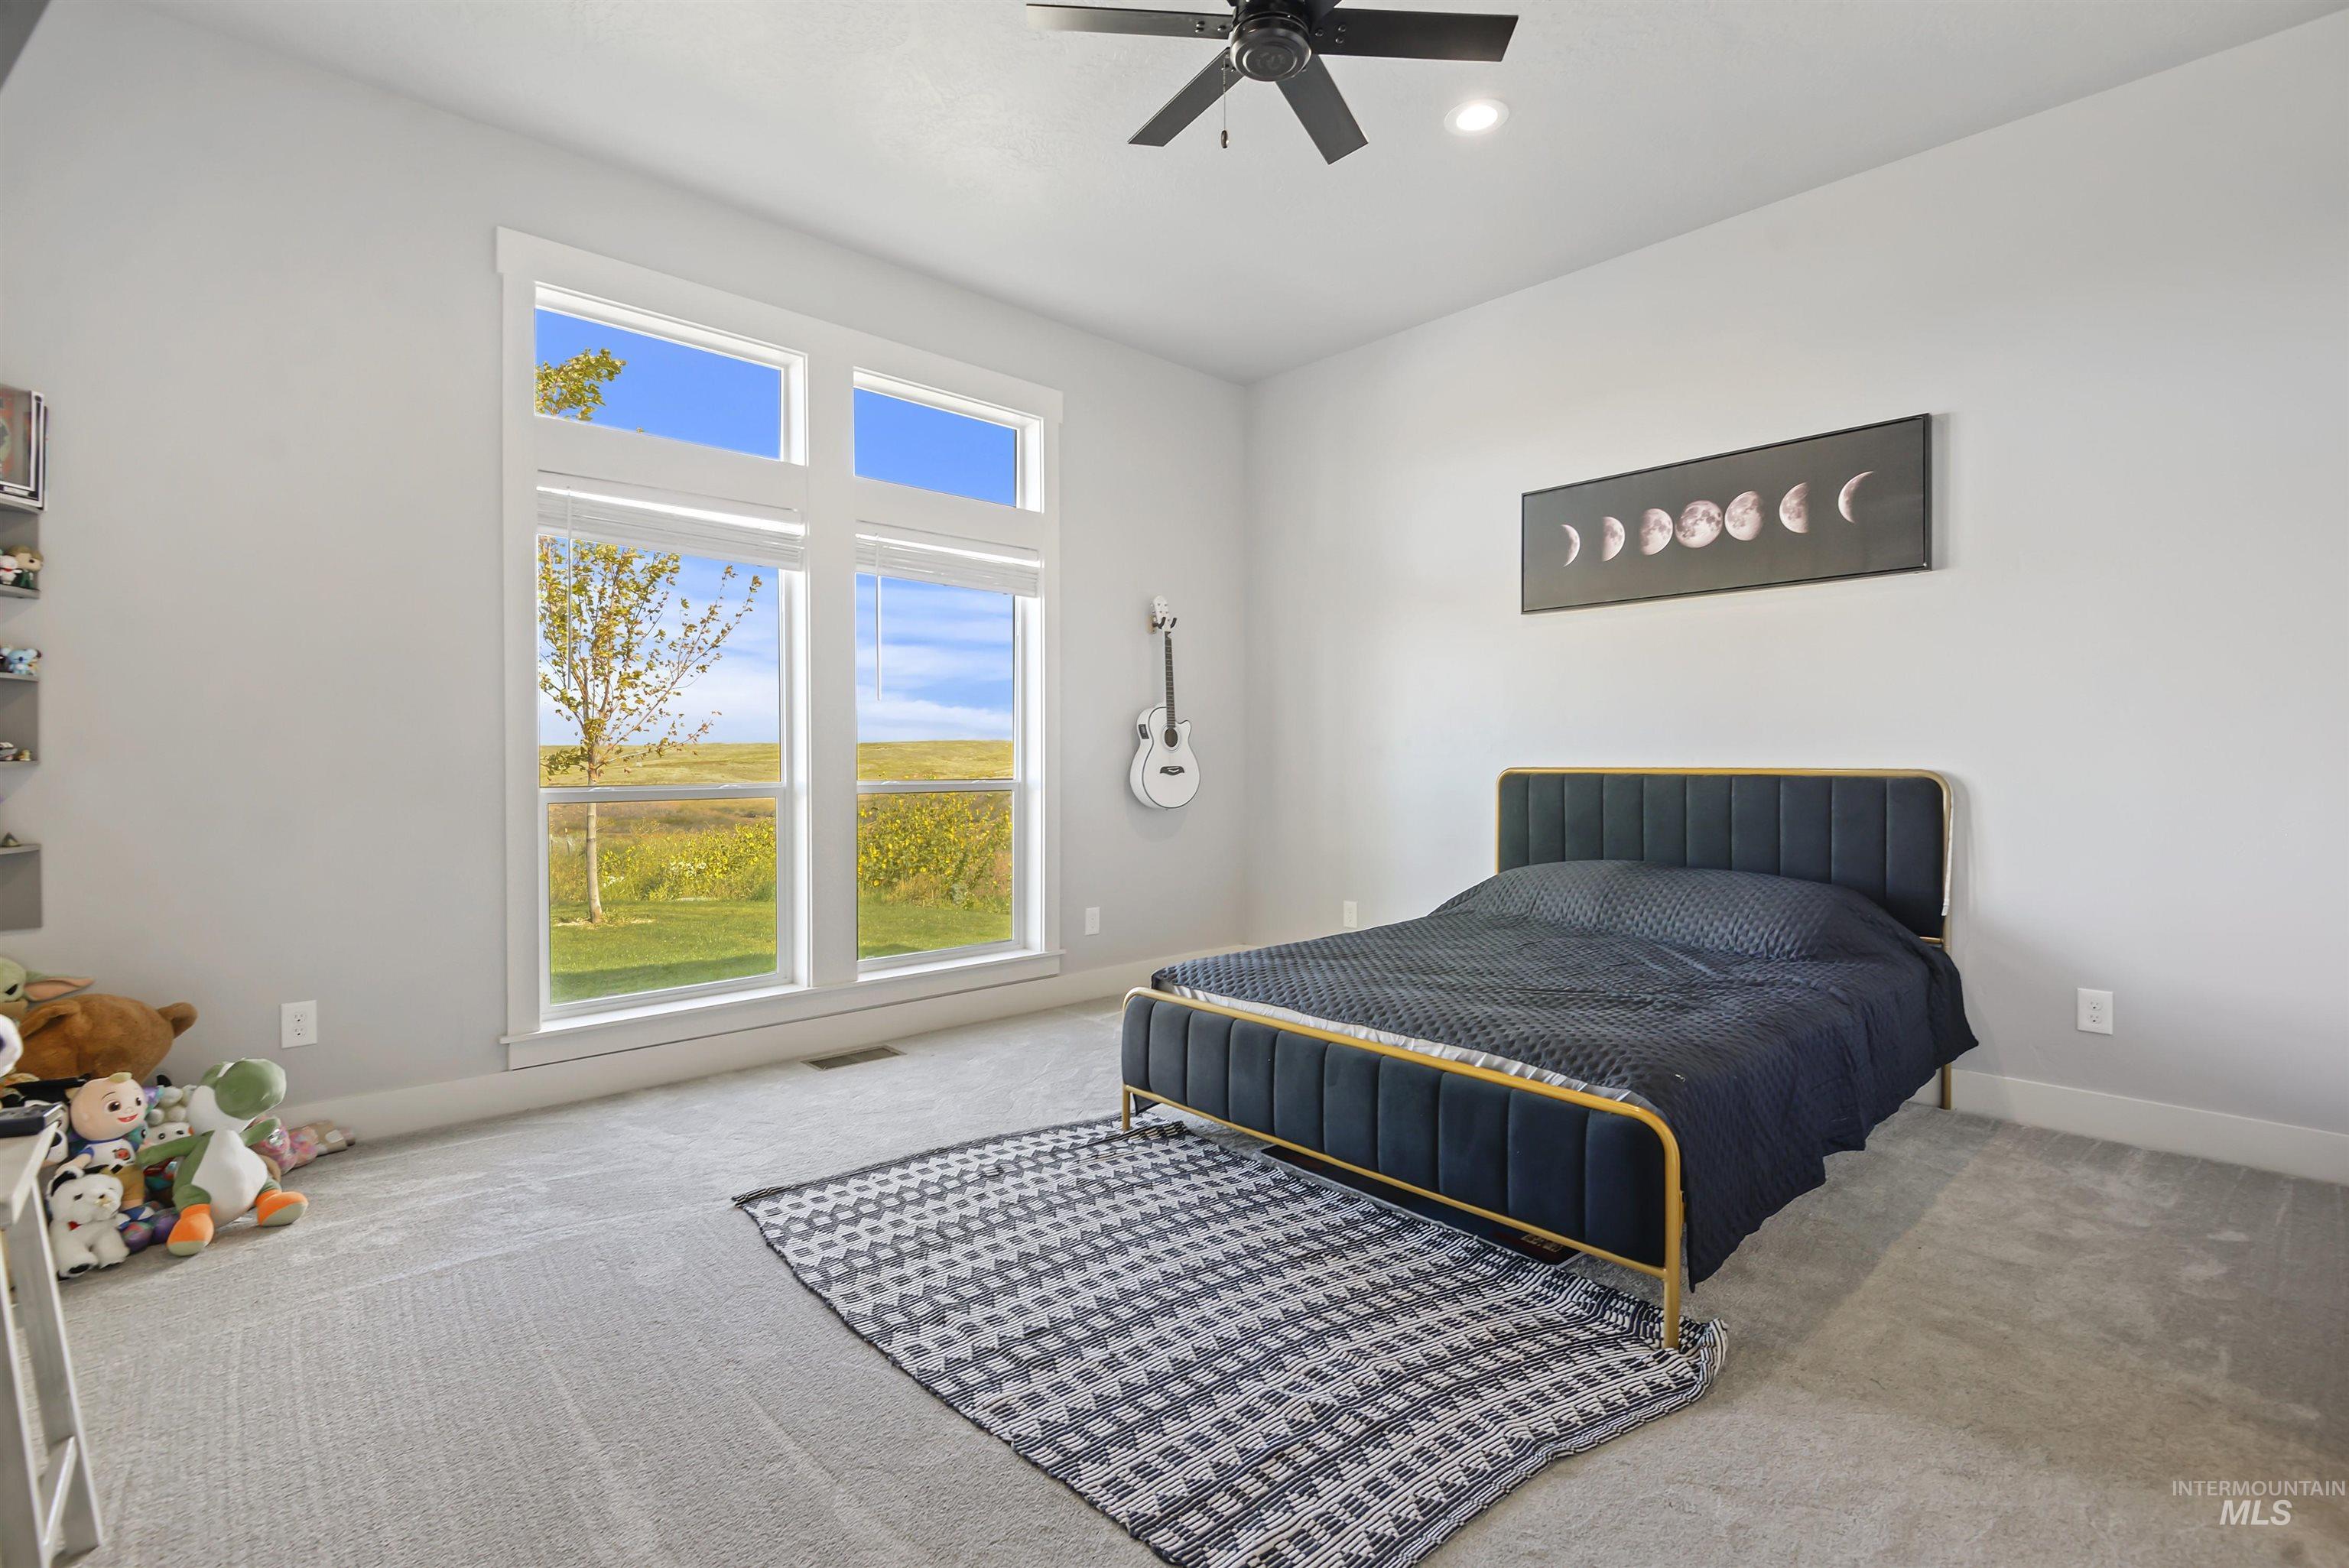 1339 Kokanee Way, Caldwell, Idaho 83607, 5 Bedrooms, 3.5 Bathrooms, Farm & Ranch For Sale, Price $1,500,000,MLS 98909589